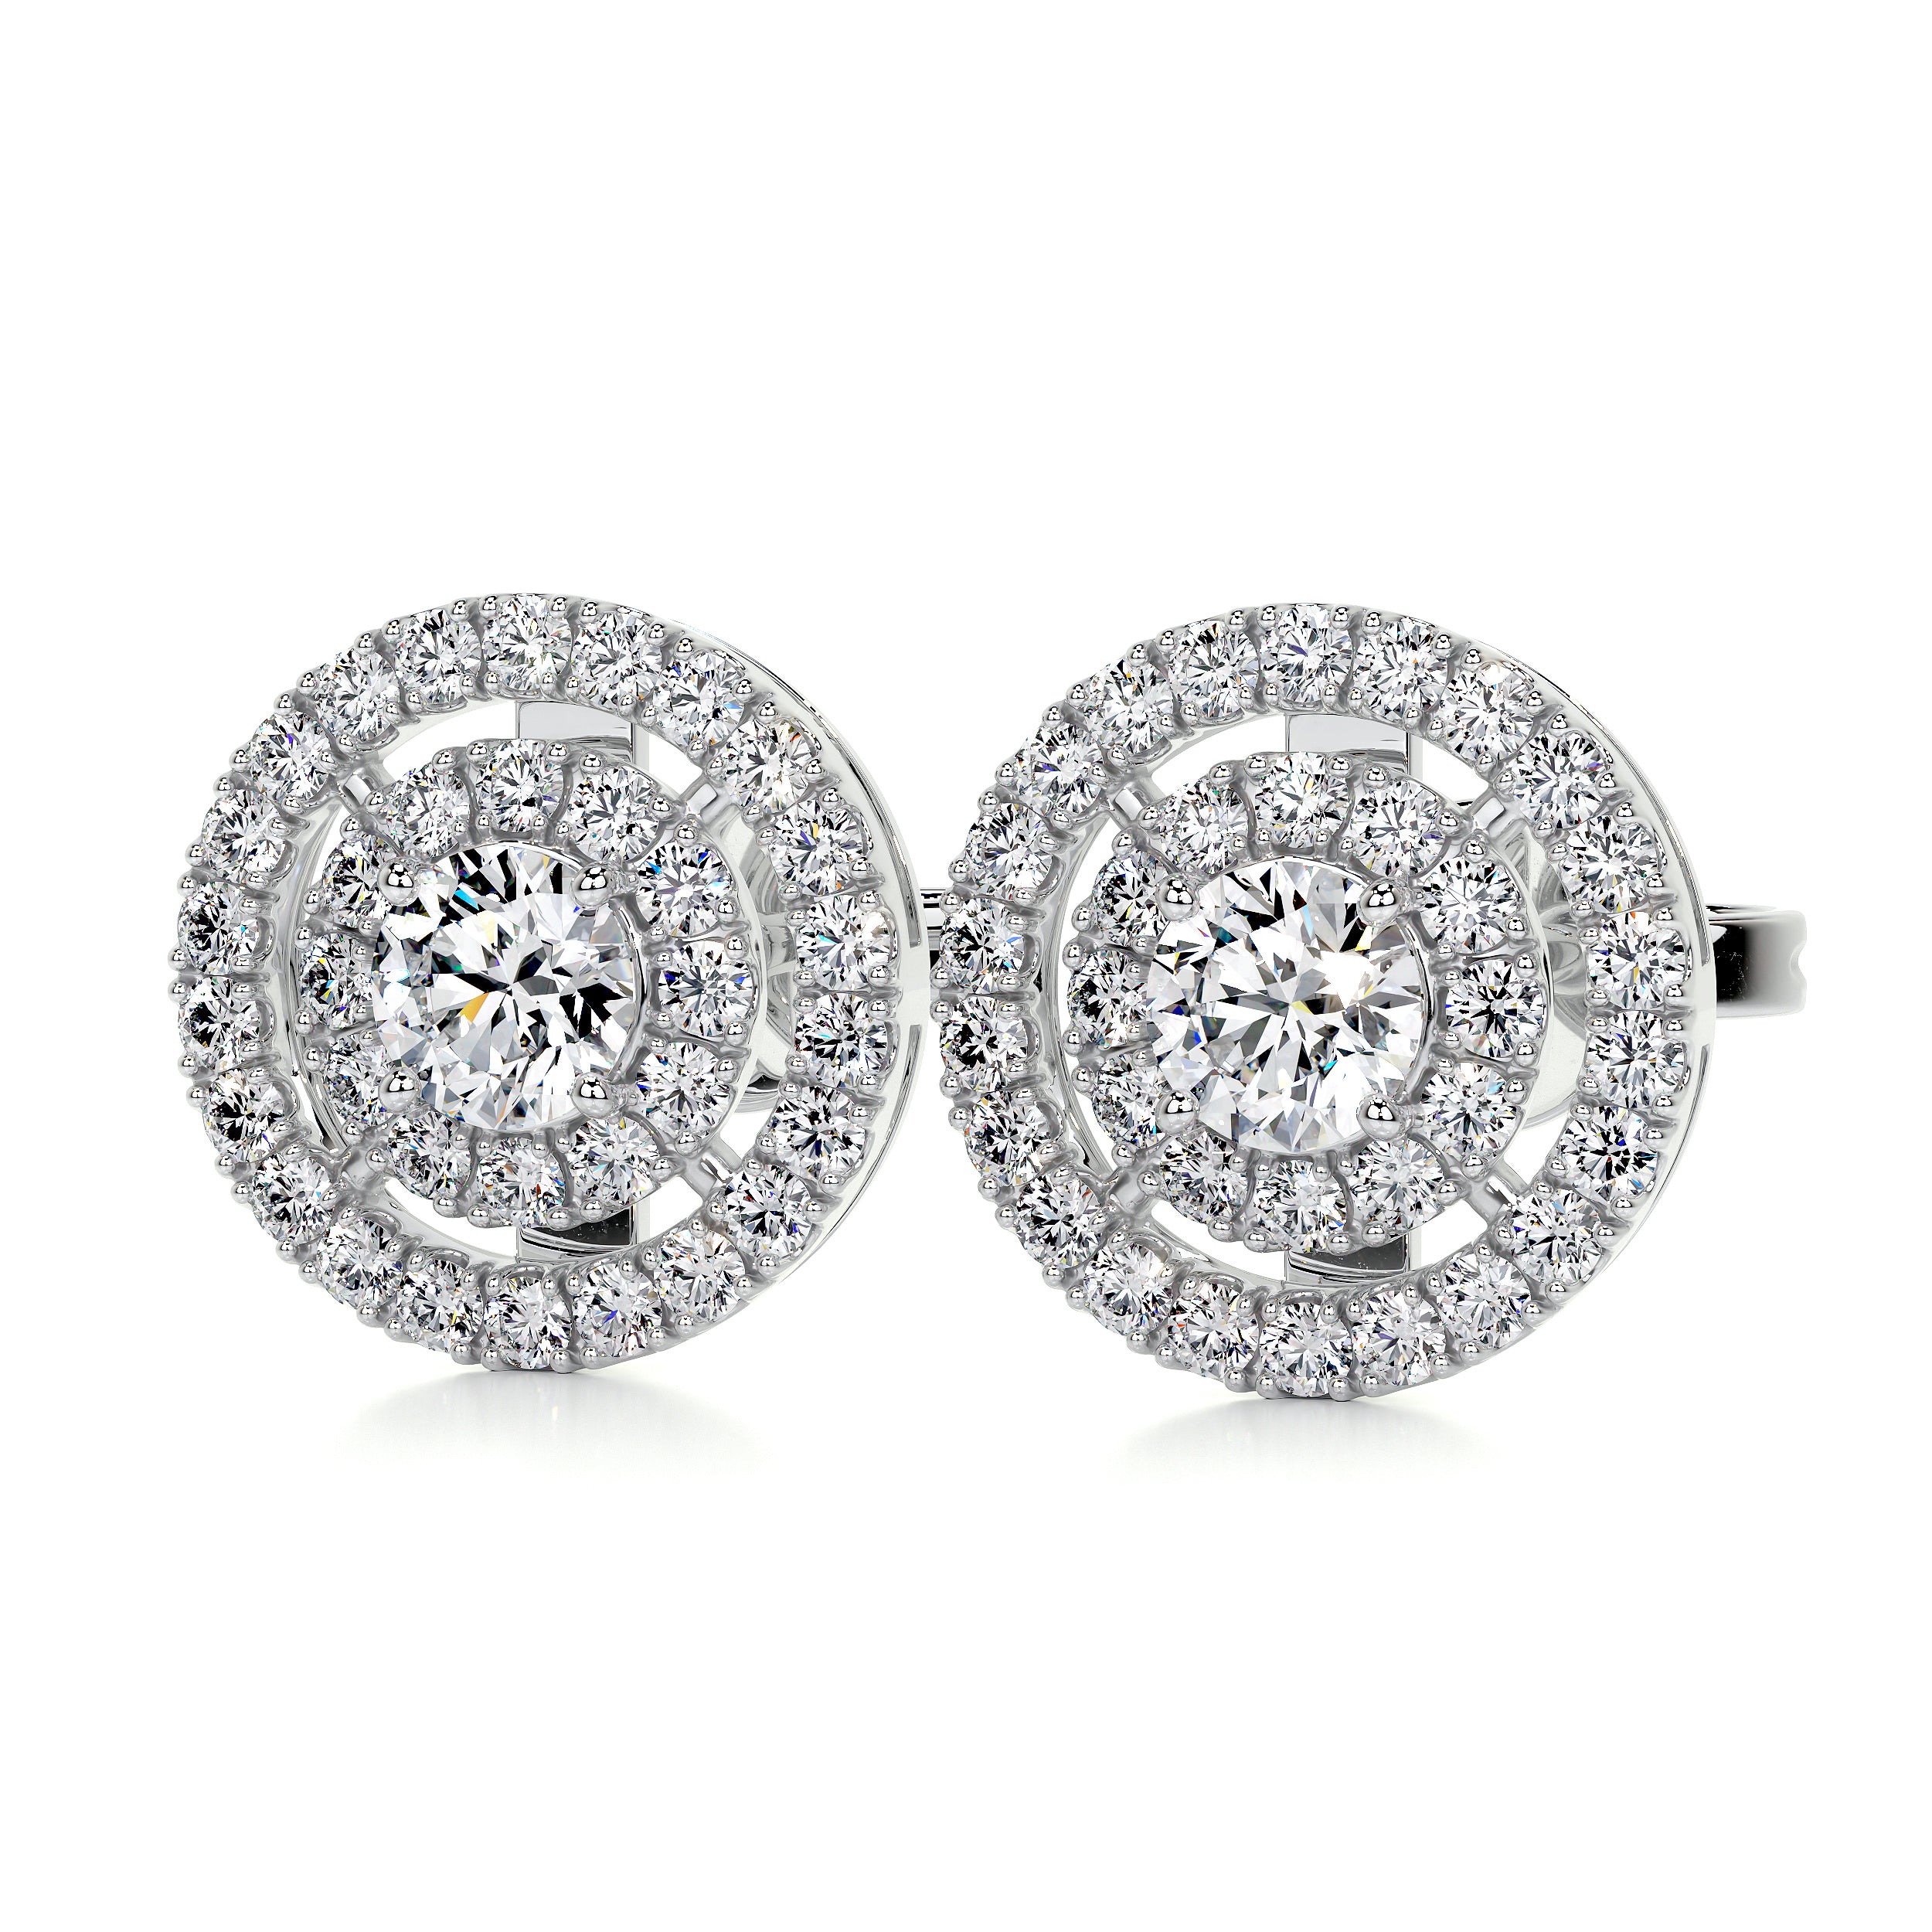 Joan Diamond Earrings   (1 Carat) - 18K White Gold